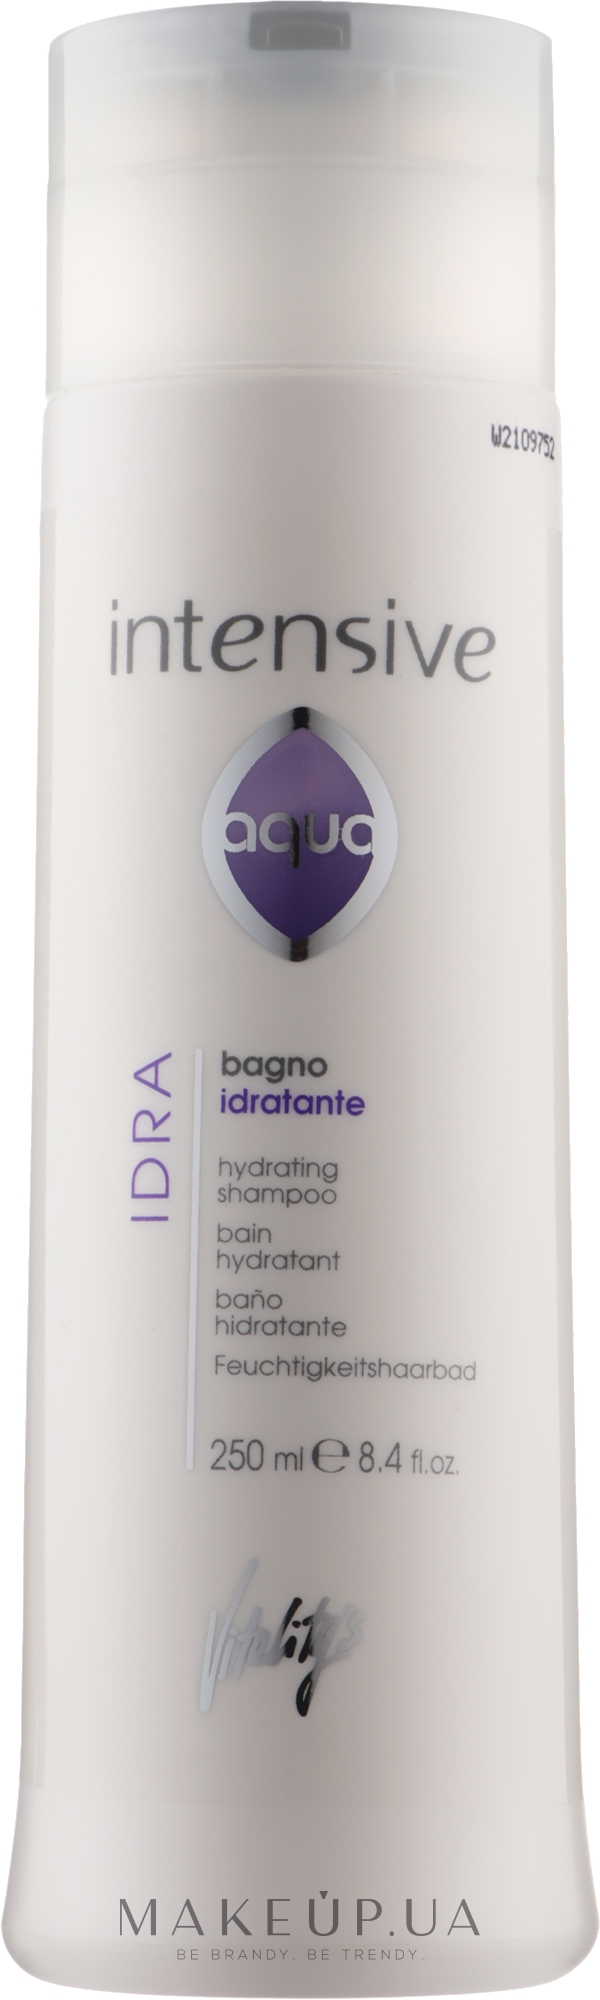 Увлажняющий шампунь - Vitality's Intensive Aqua Hydrating Shampoo — фото 250ml